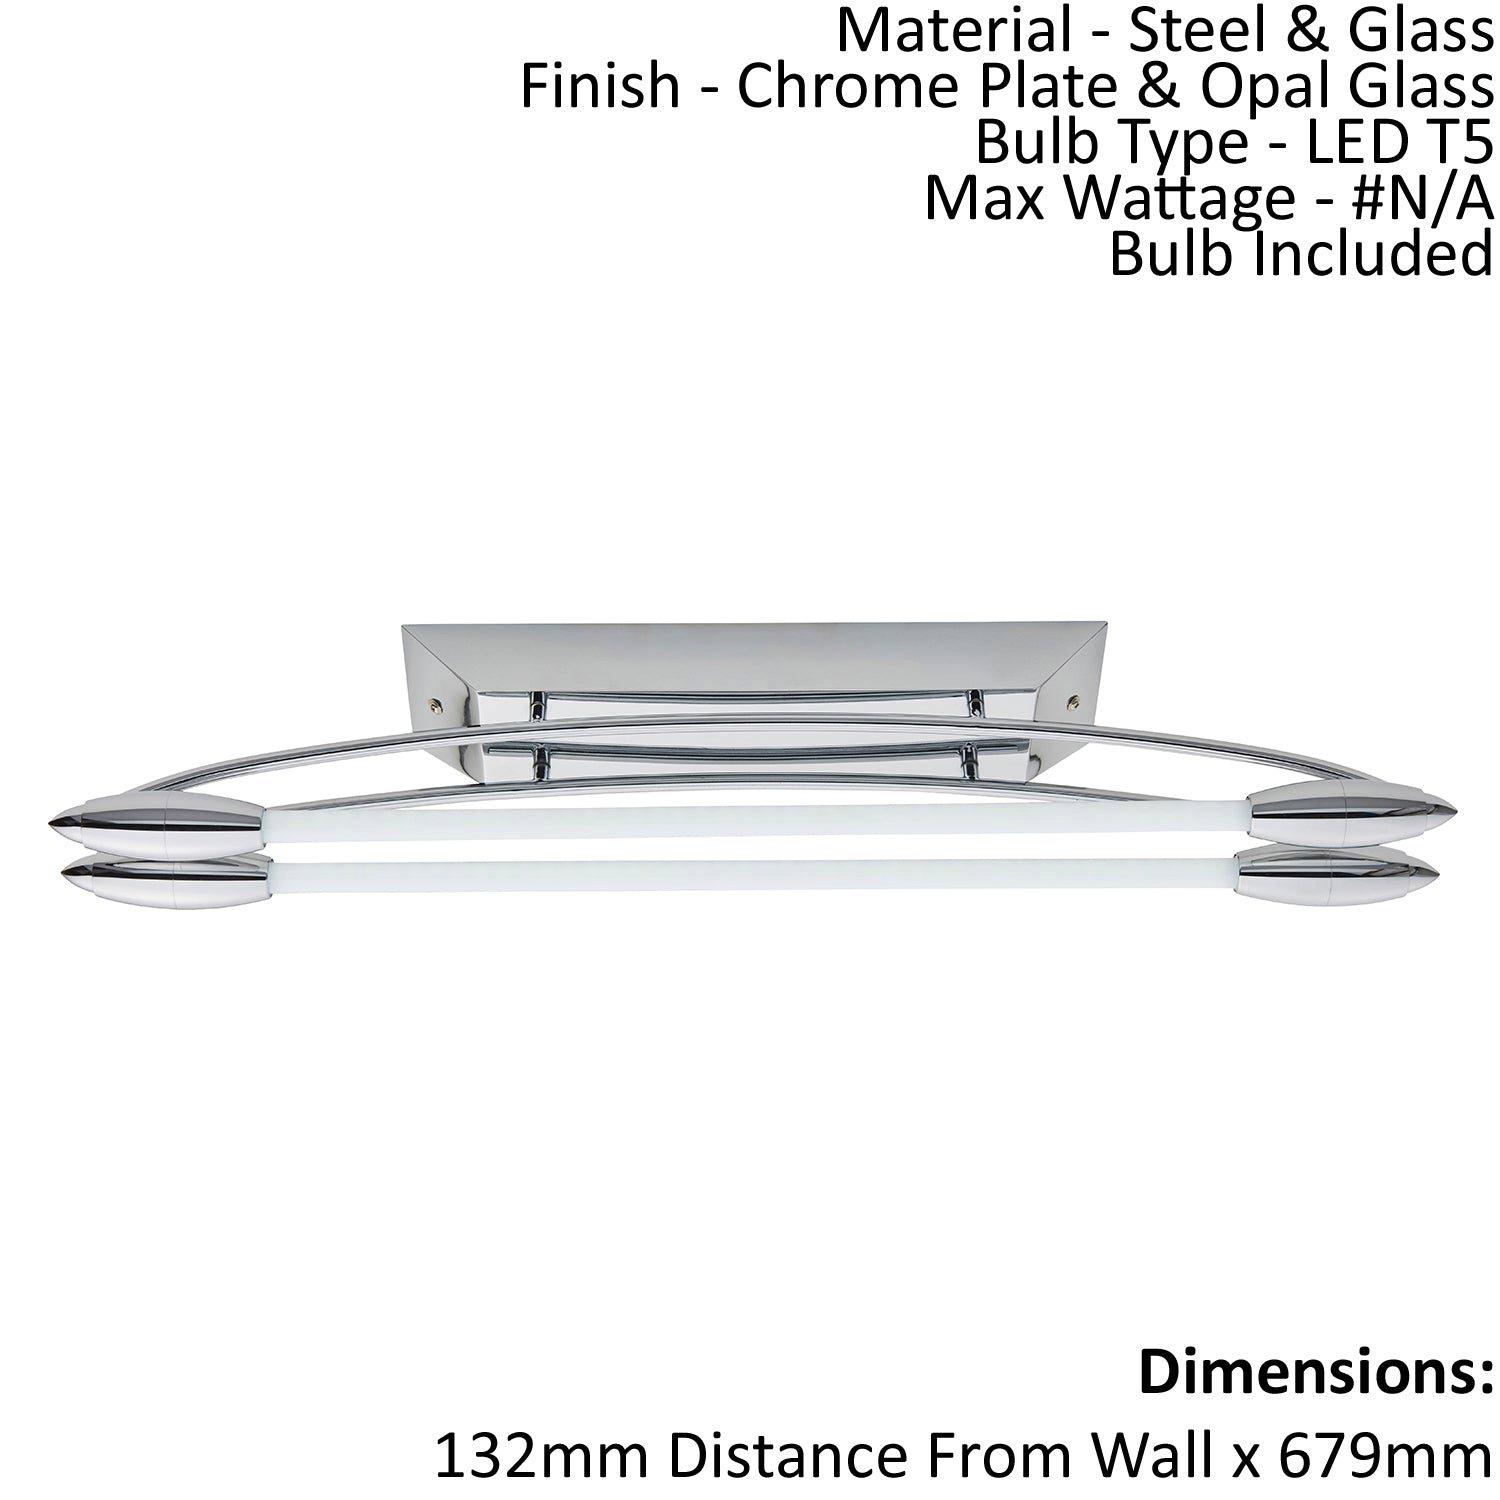 Flush Ceiling Light - Chrome Plate & Opal Glass - 2 x 8W LED T5 - Bulb Included